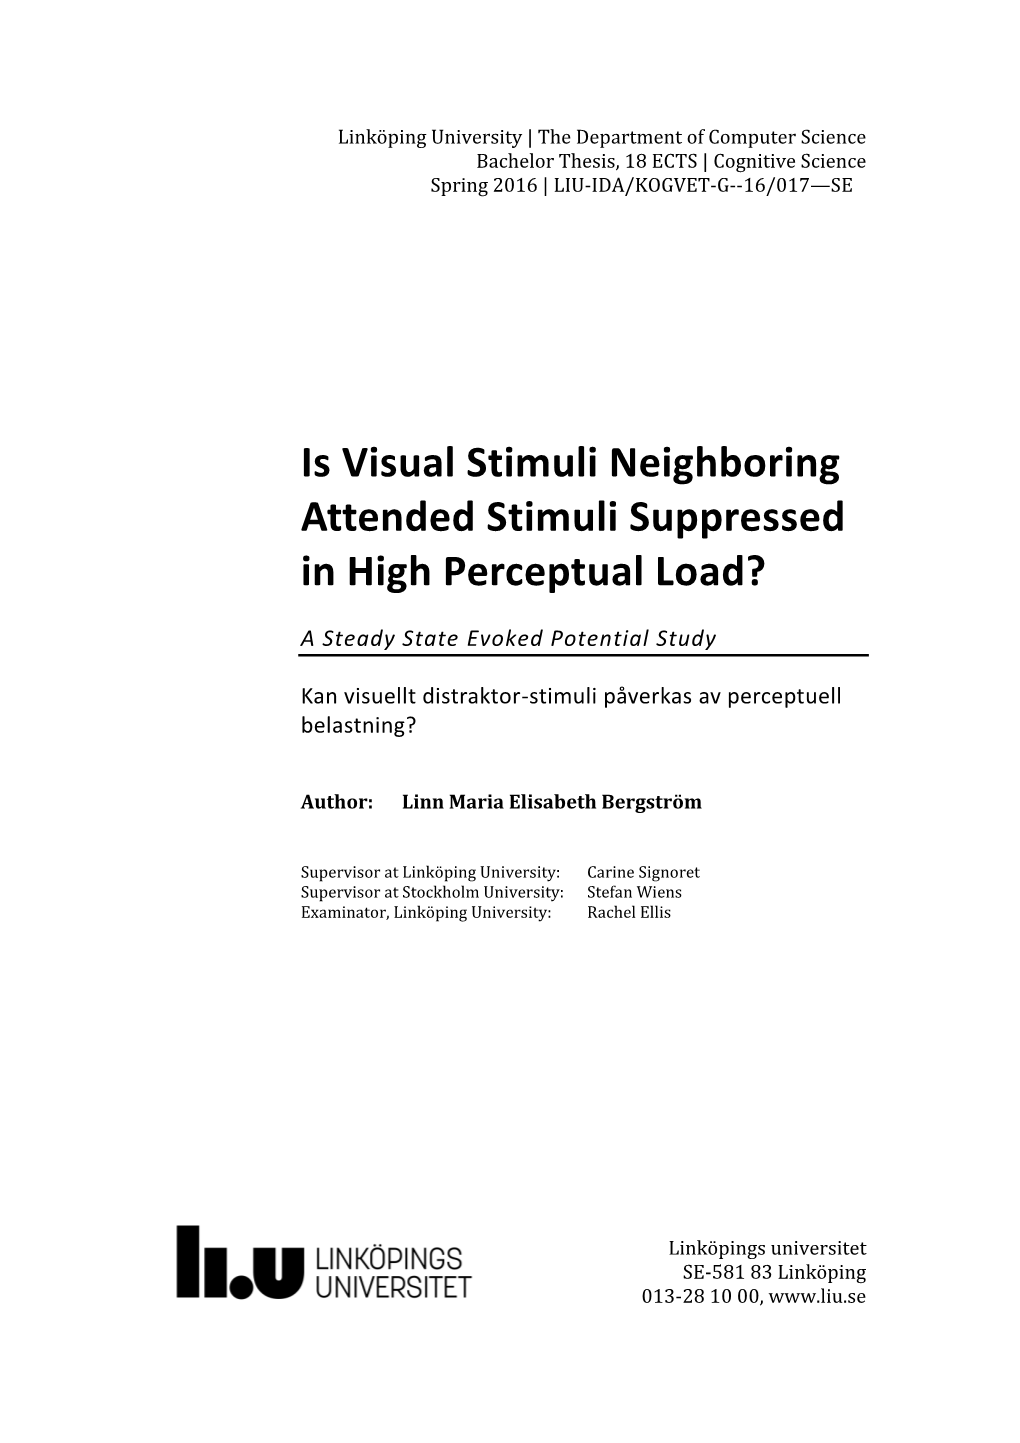 Are Visual Stimuli Neighboring Attended Stimuli Suppressed In